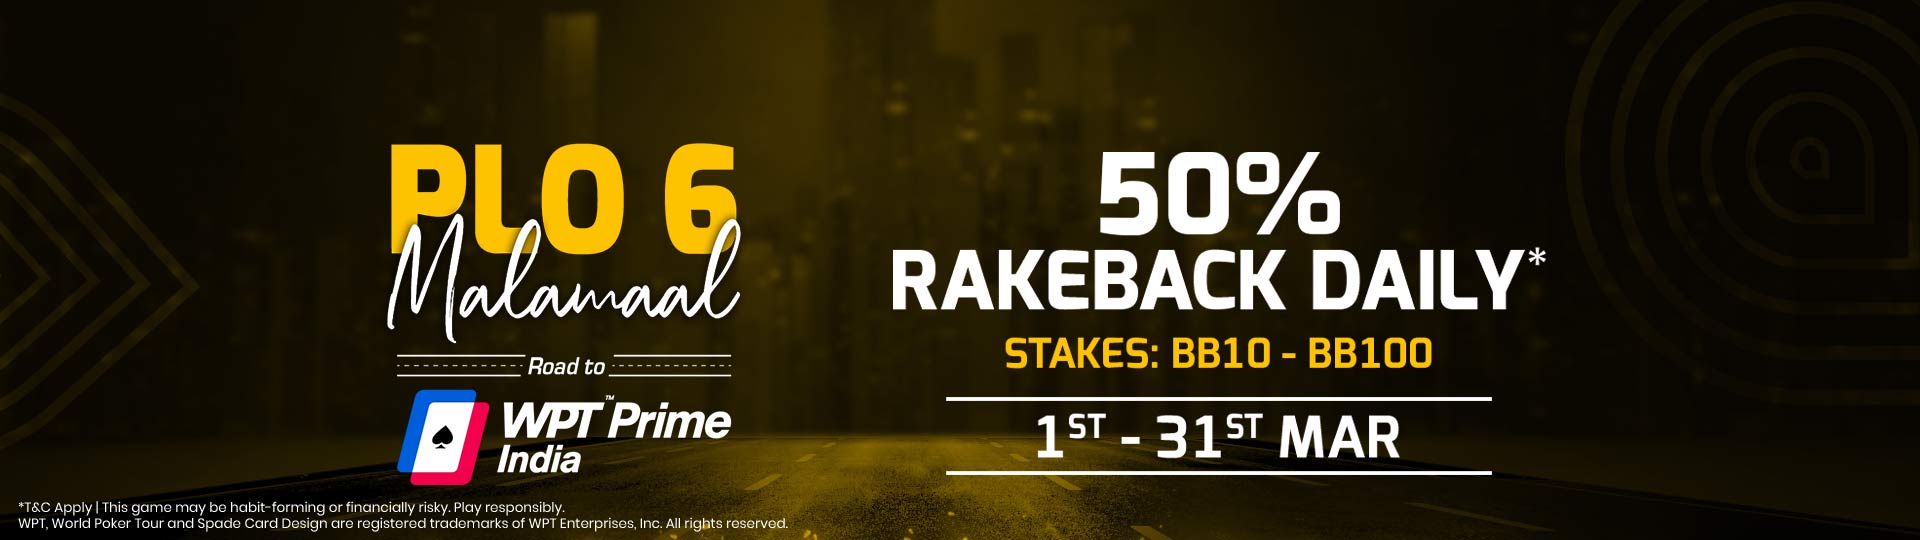 Adda52|Online|Poker|PLO6 Malamaal Rakeback|March